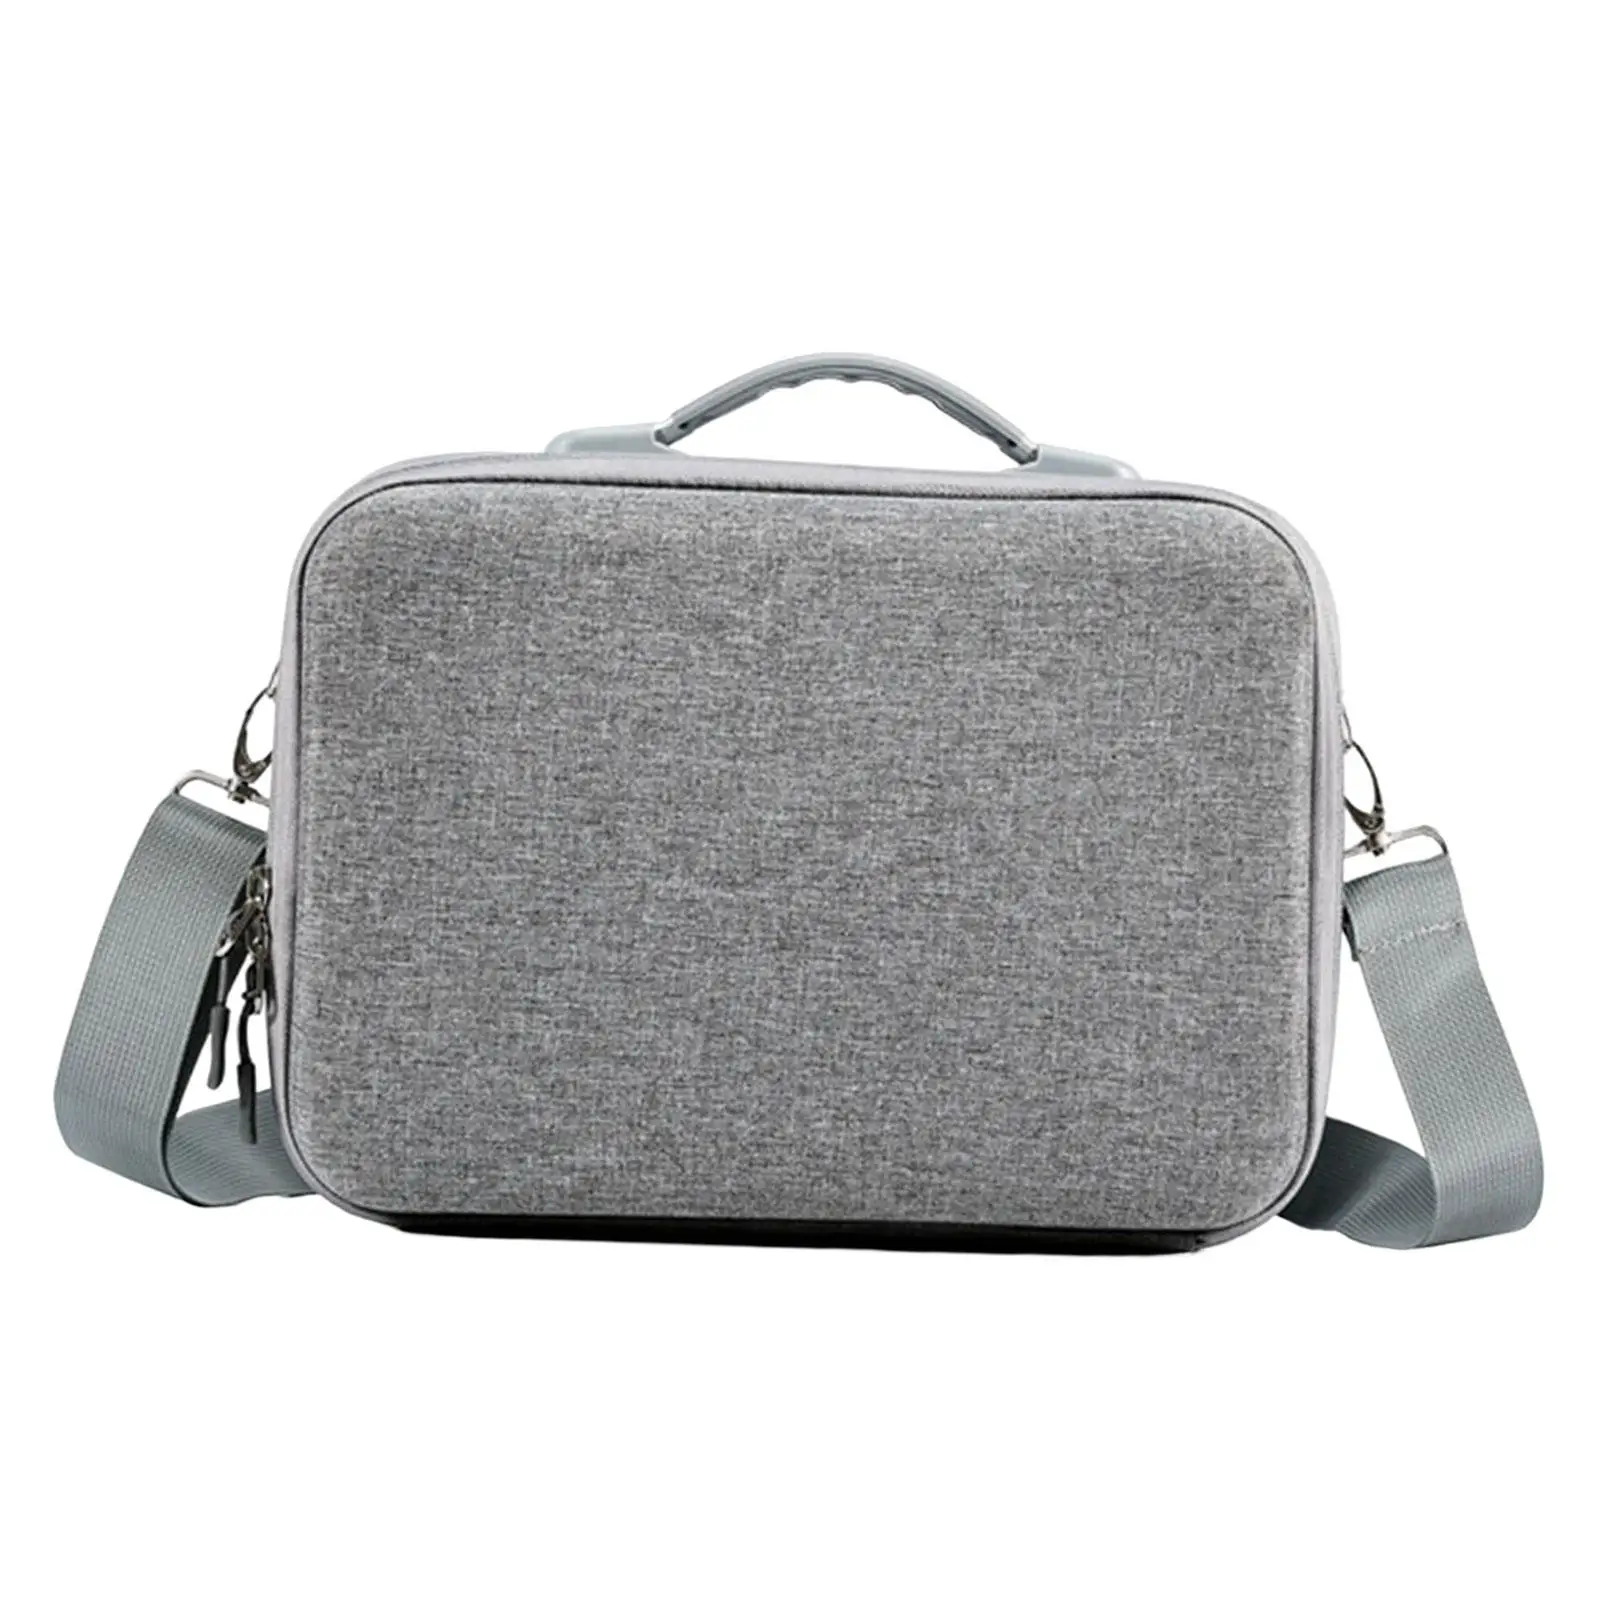 Storage Bag Portable Handbag Box Mini3 Pro Bag DJI Mini3 Pro Carrying Case DJI Mini 3 Pro Backpack